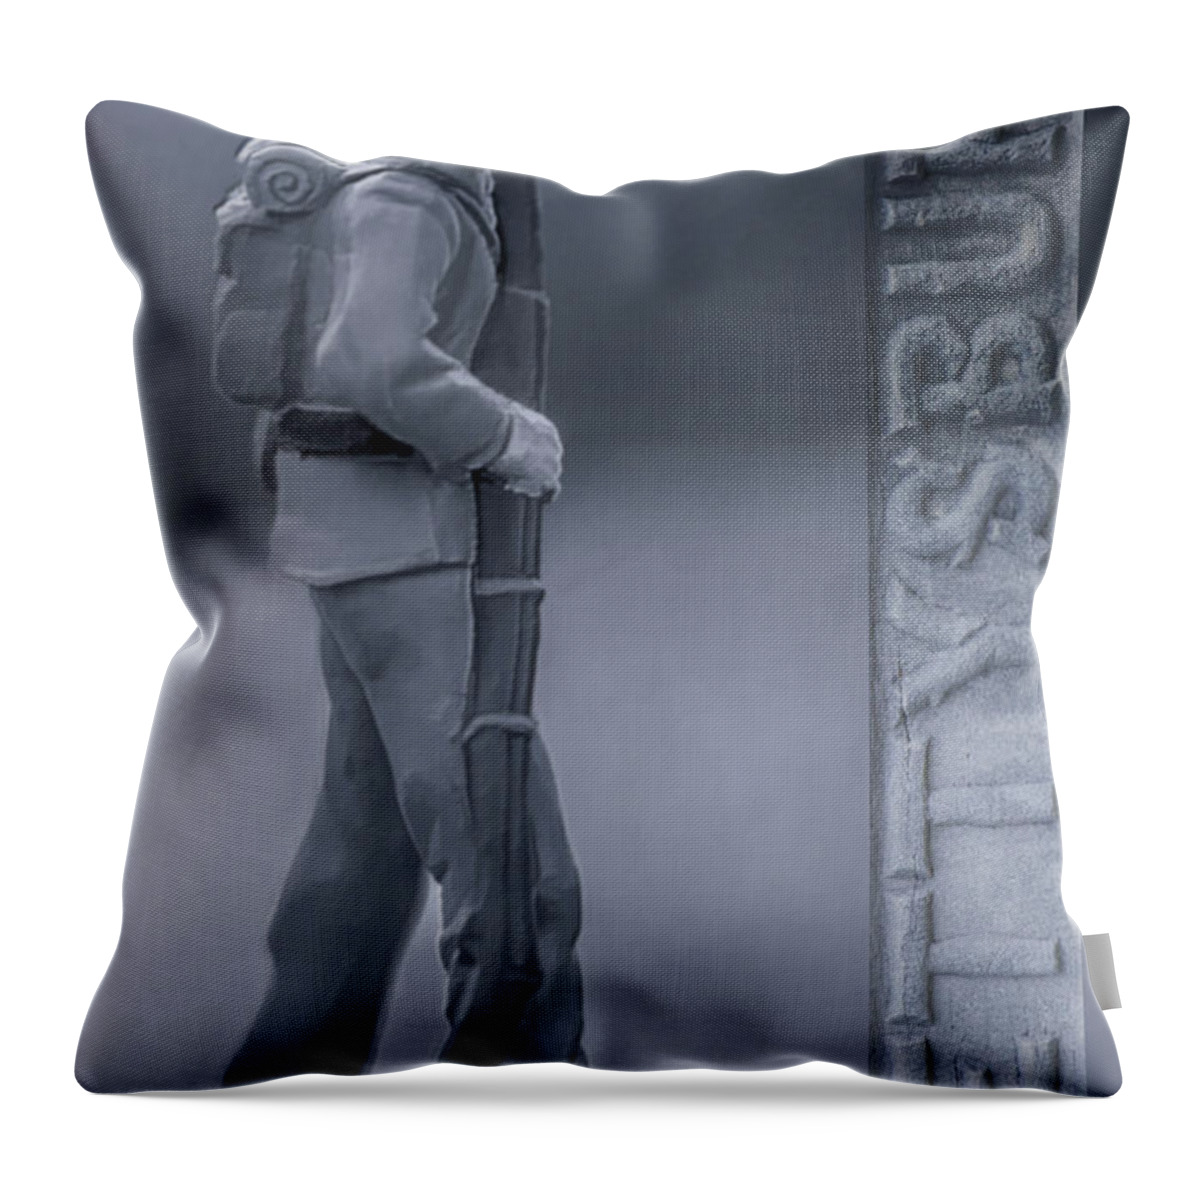 Gettysburg Soldier Throw Pillow featuring the digital art Gettysburg Soldier by Randy Steele